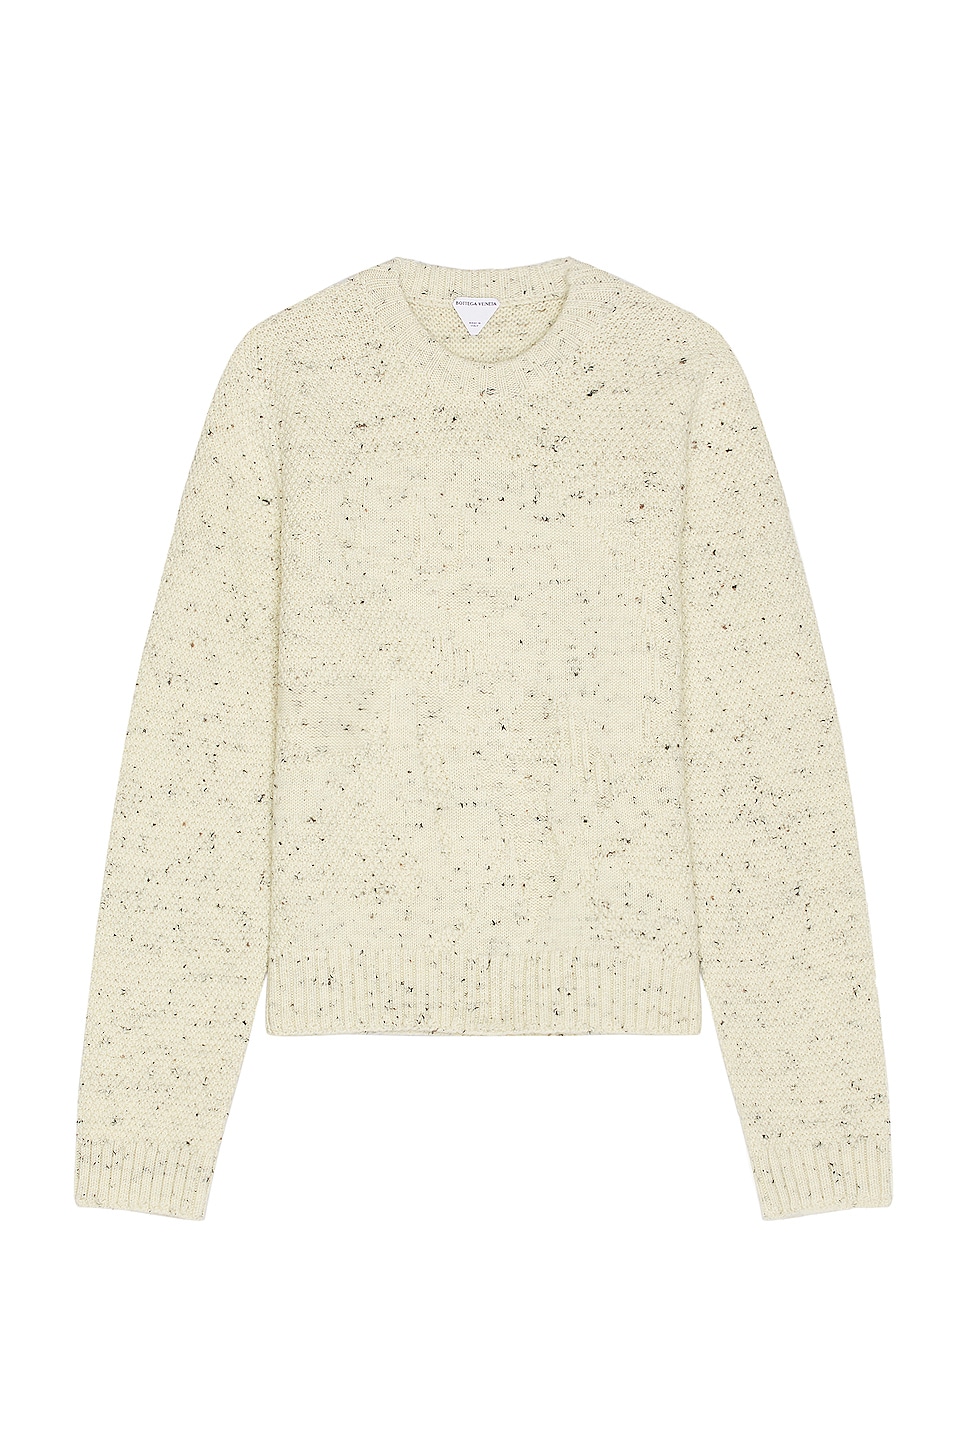 Image 1 of Bottega Veneta Multistitch Graphic Sweater in Dove